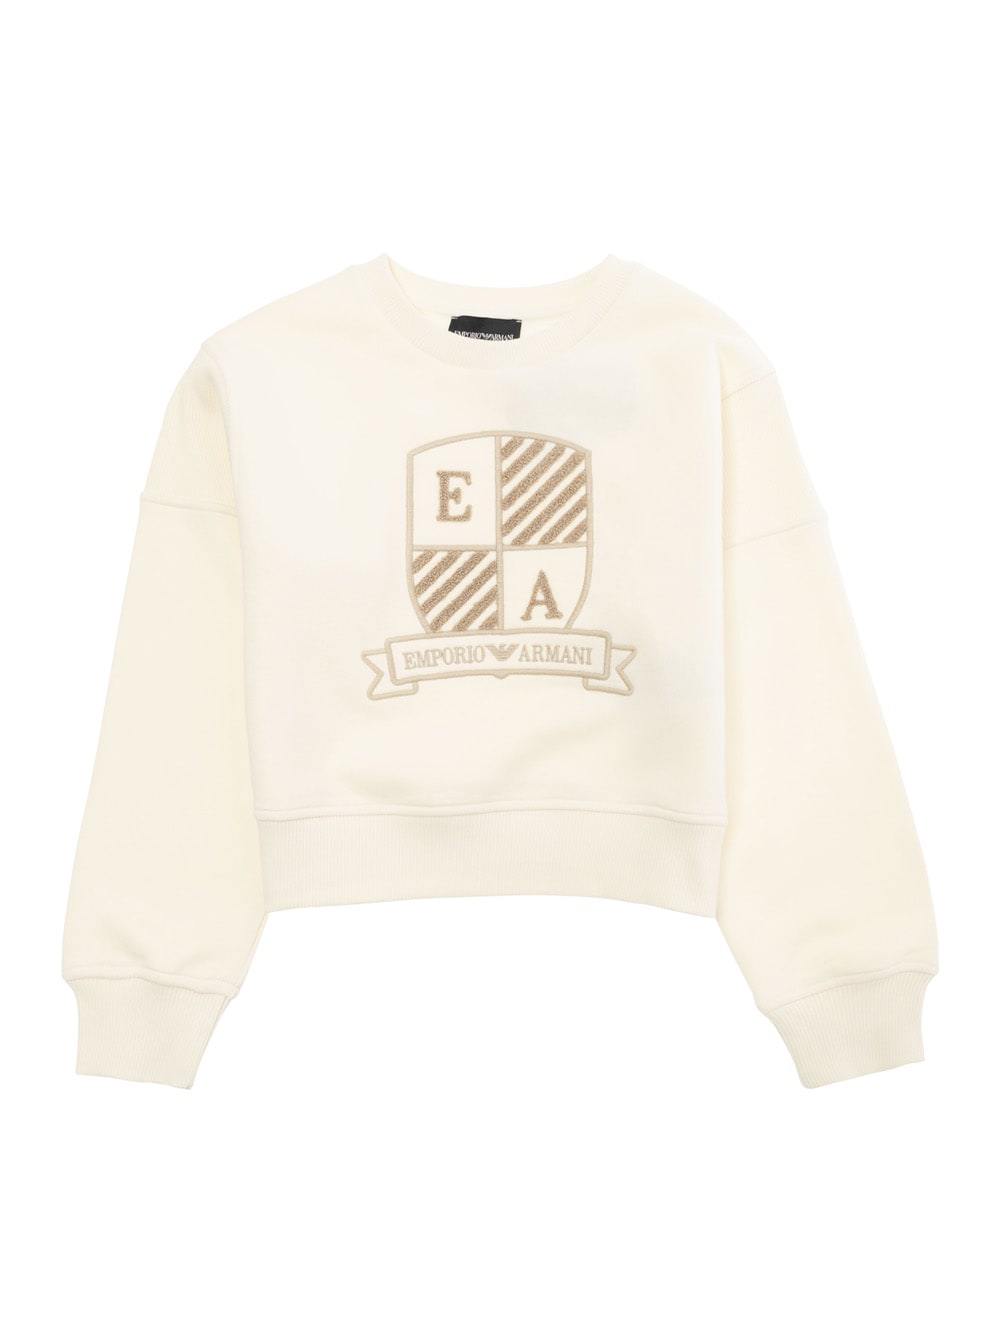 Emporio Armani Kids' White Sweatshirt With Jacquard Crest In Cotton Girl